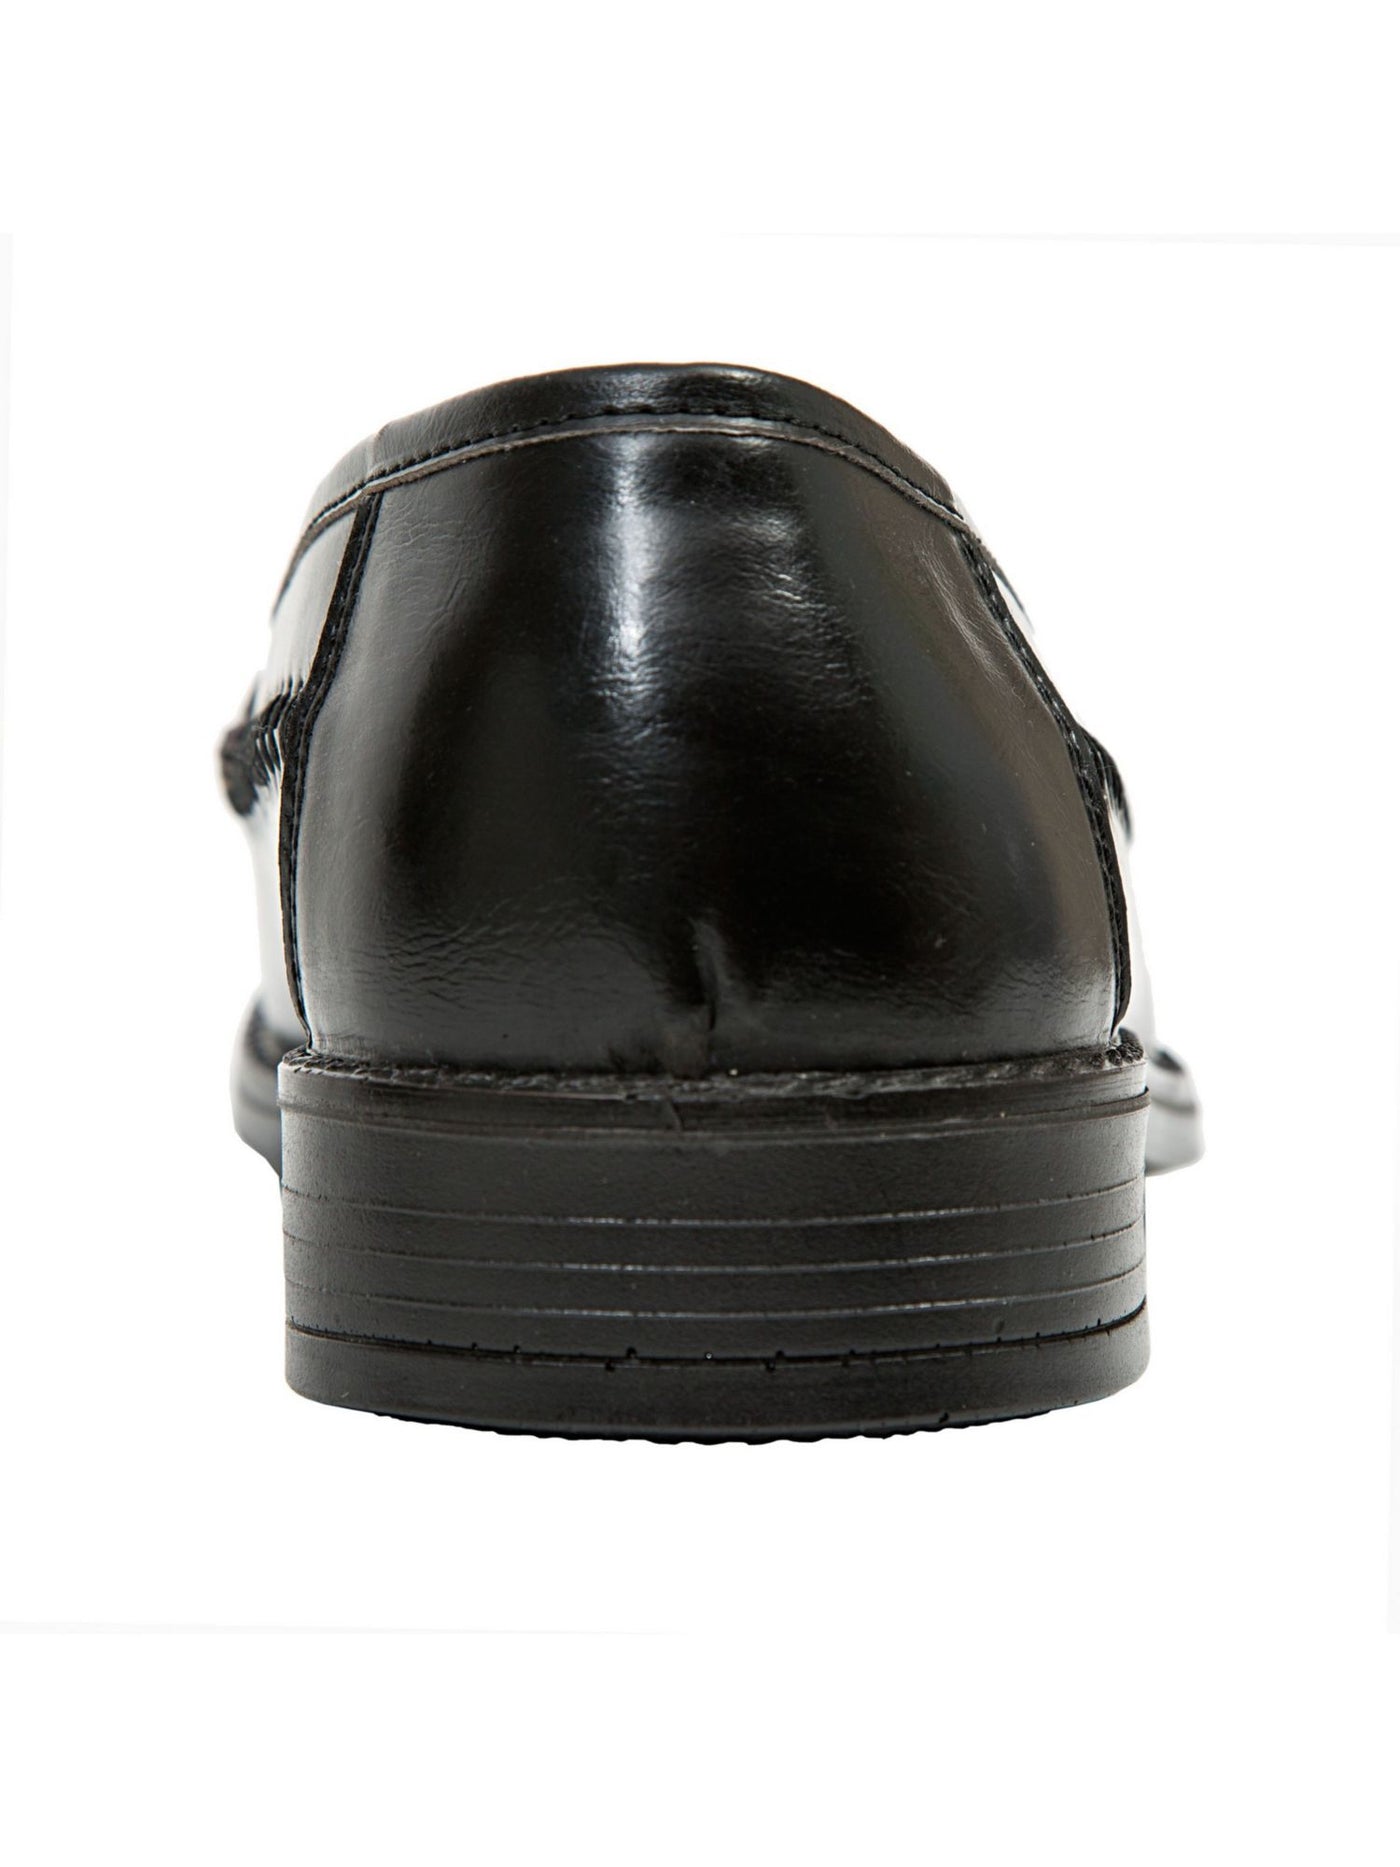 DEER STAGS Mens Black Tasseled Cushioned Herman Round Toe Slip On Loafers Shoes 8.5 W